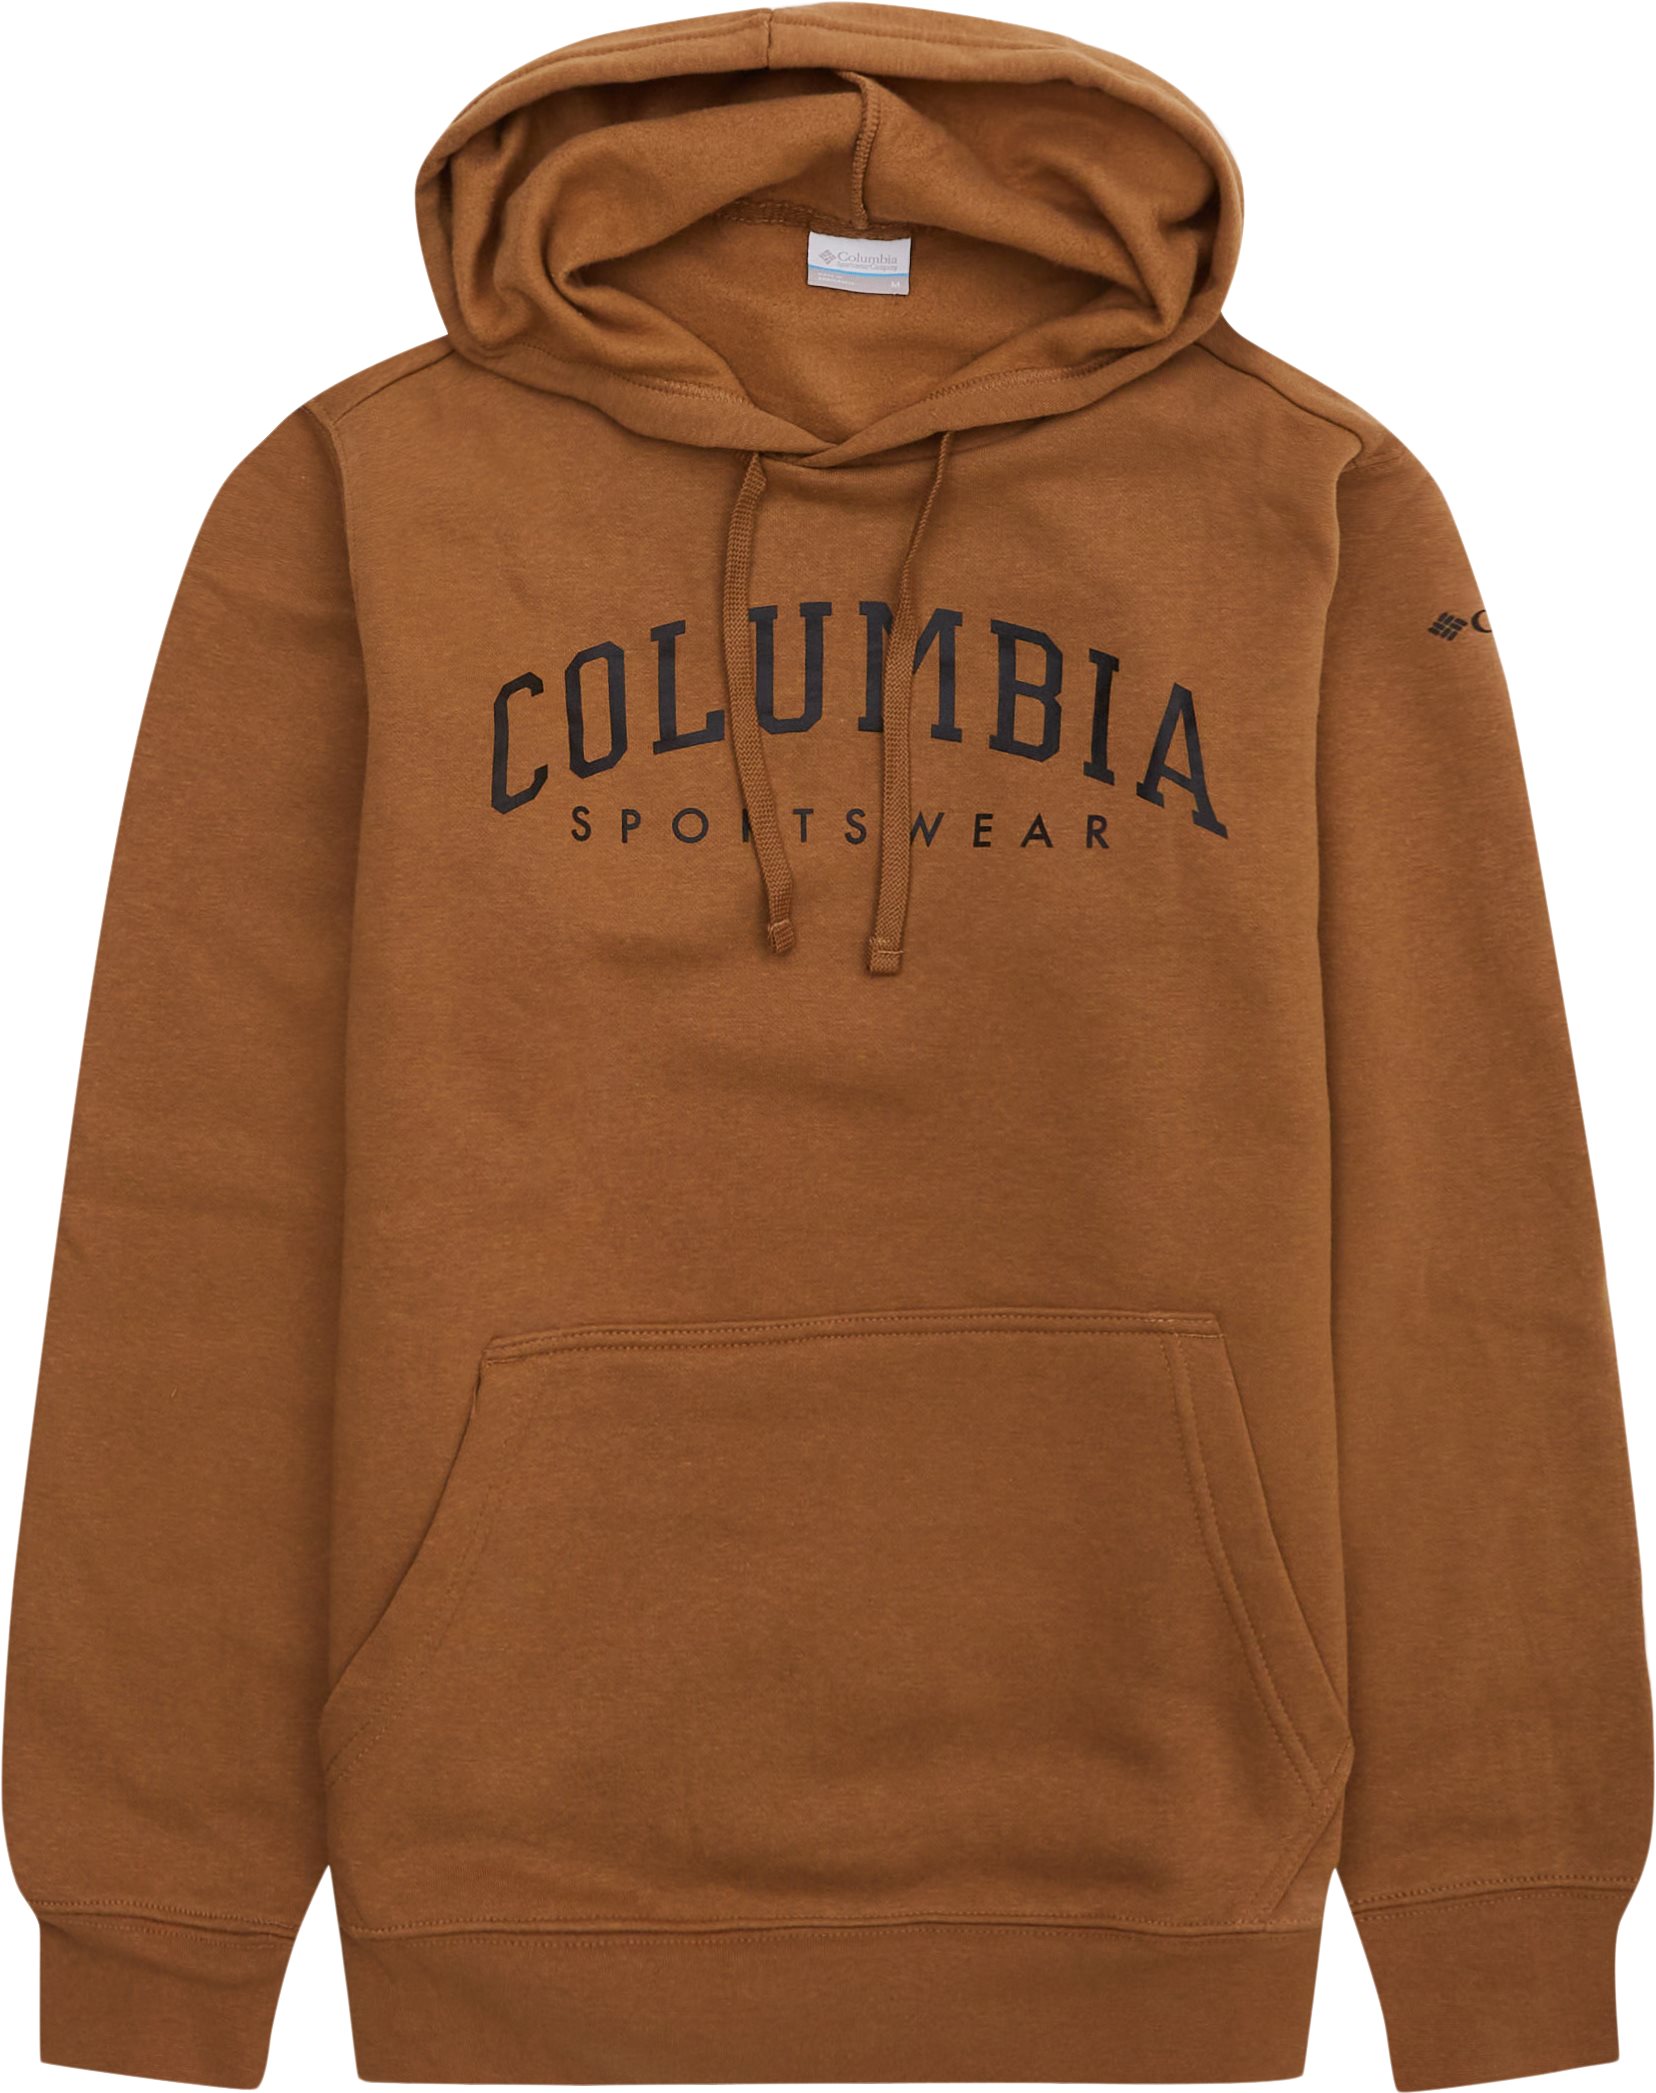 Columbia Sweatshirts COLUMBIA TREK HOODIE Brun